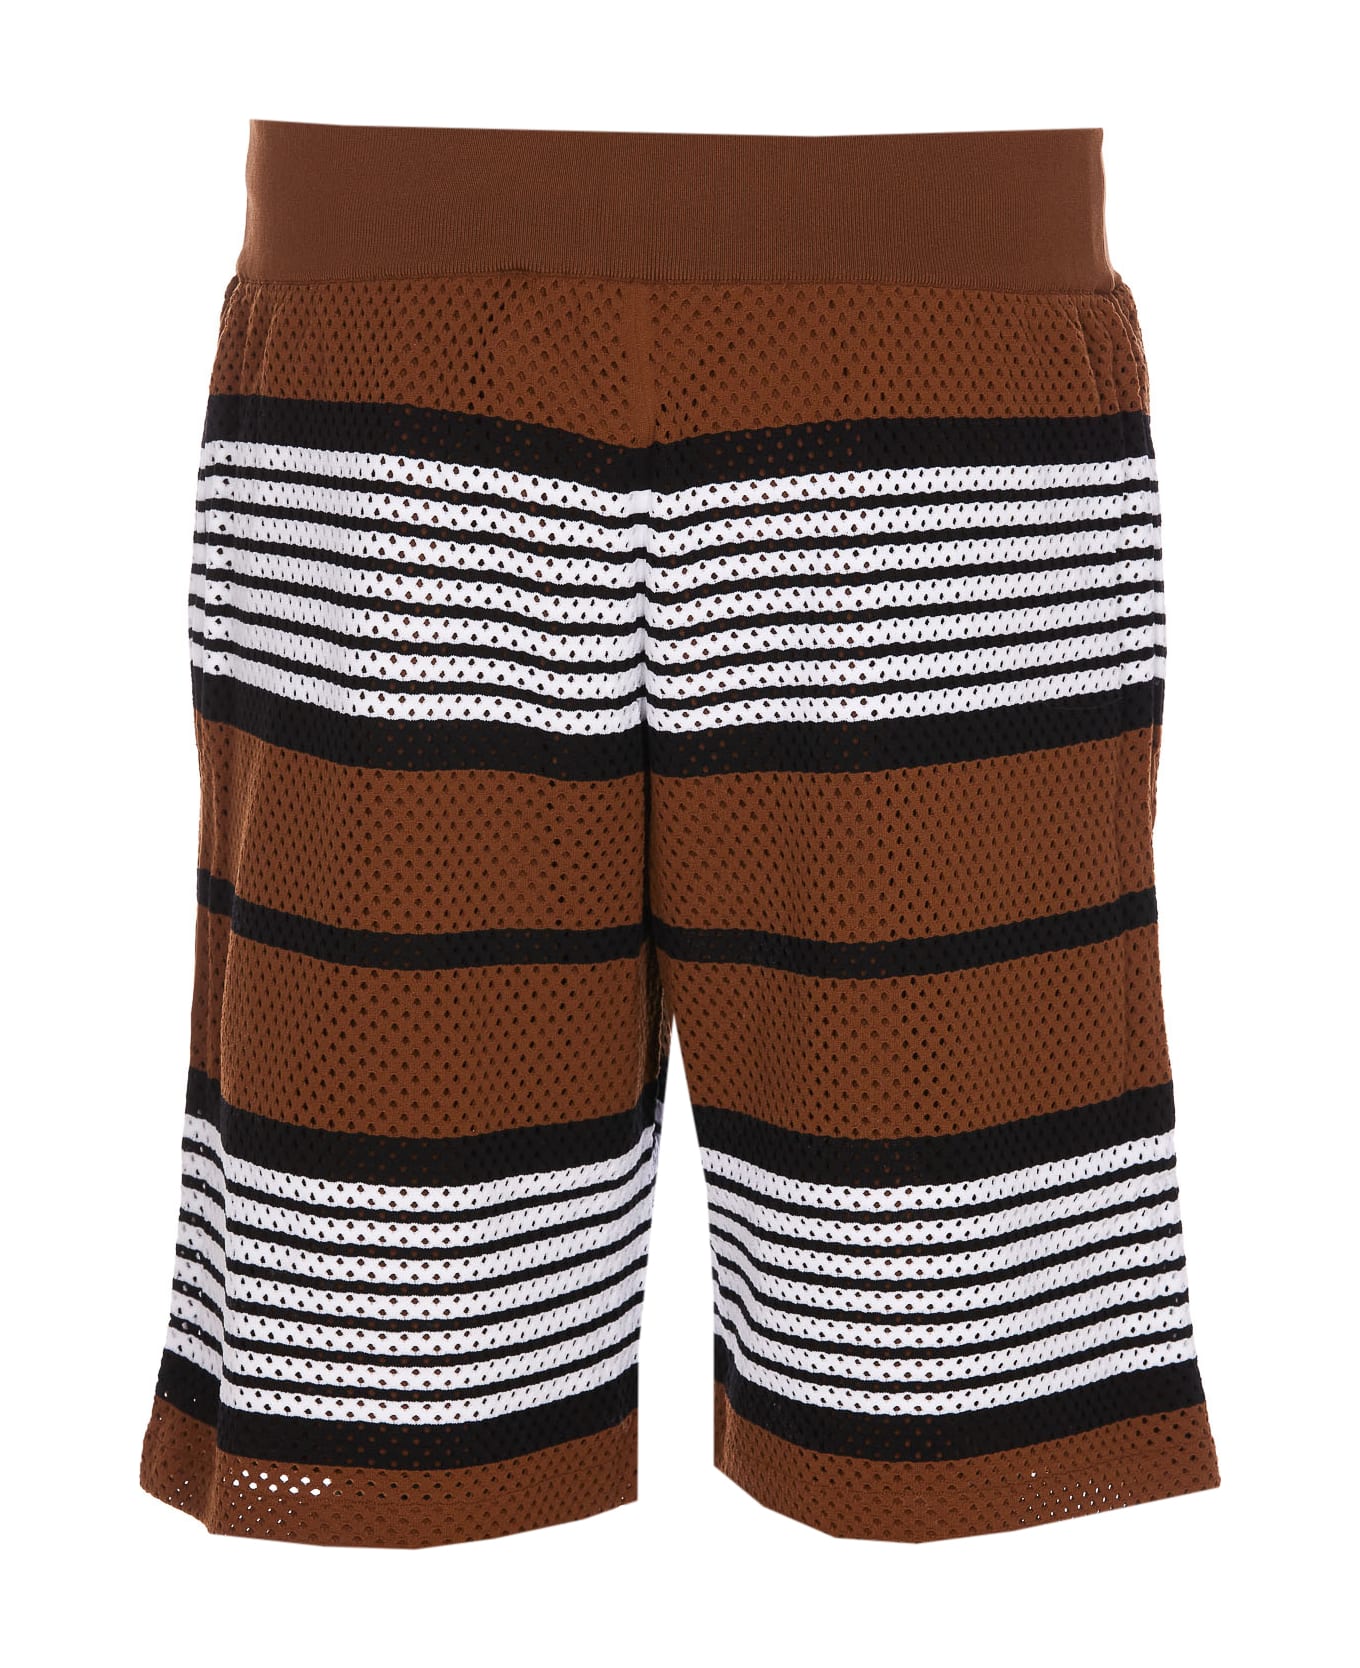 Burberry Stripe Print Shorts - Dark birch brown